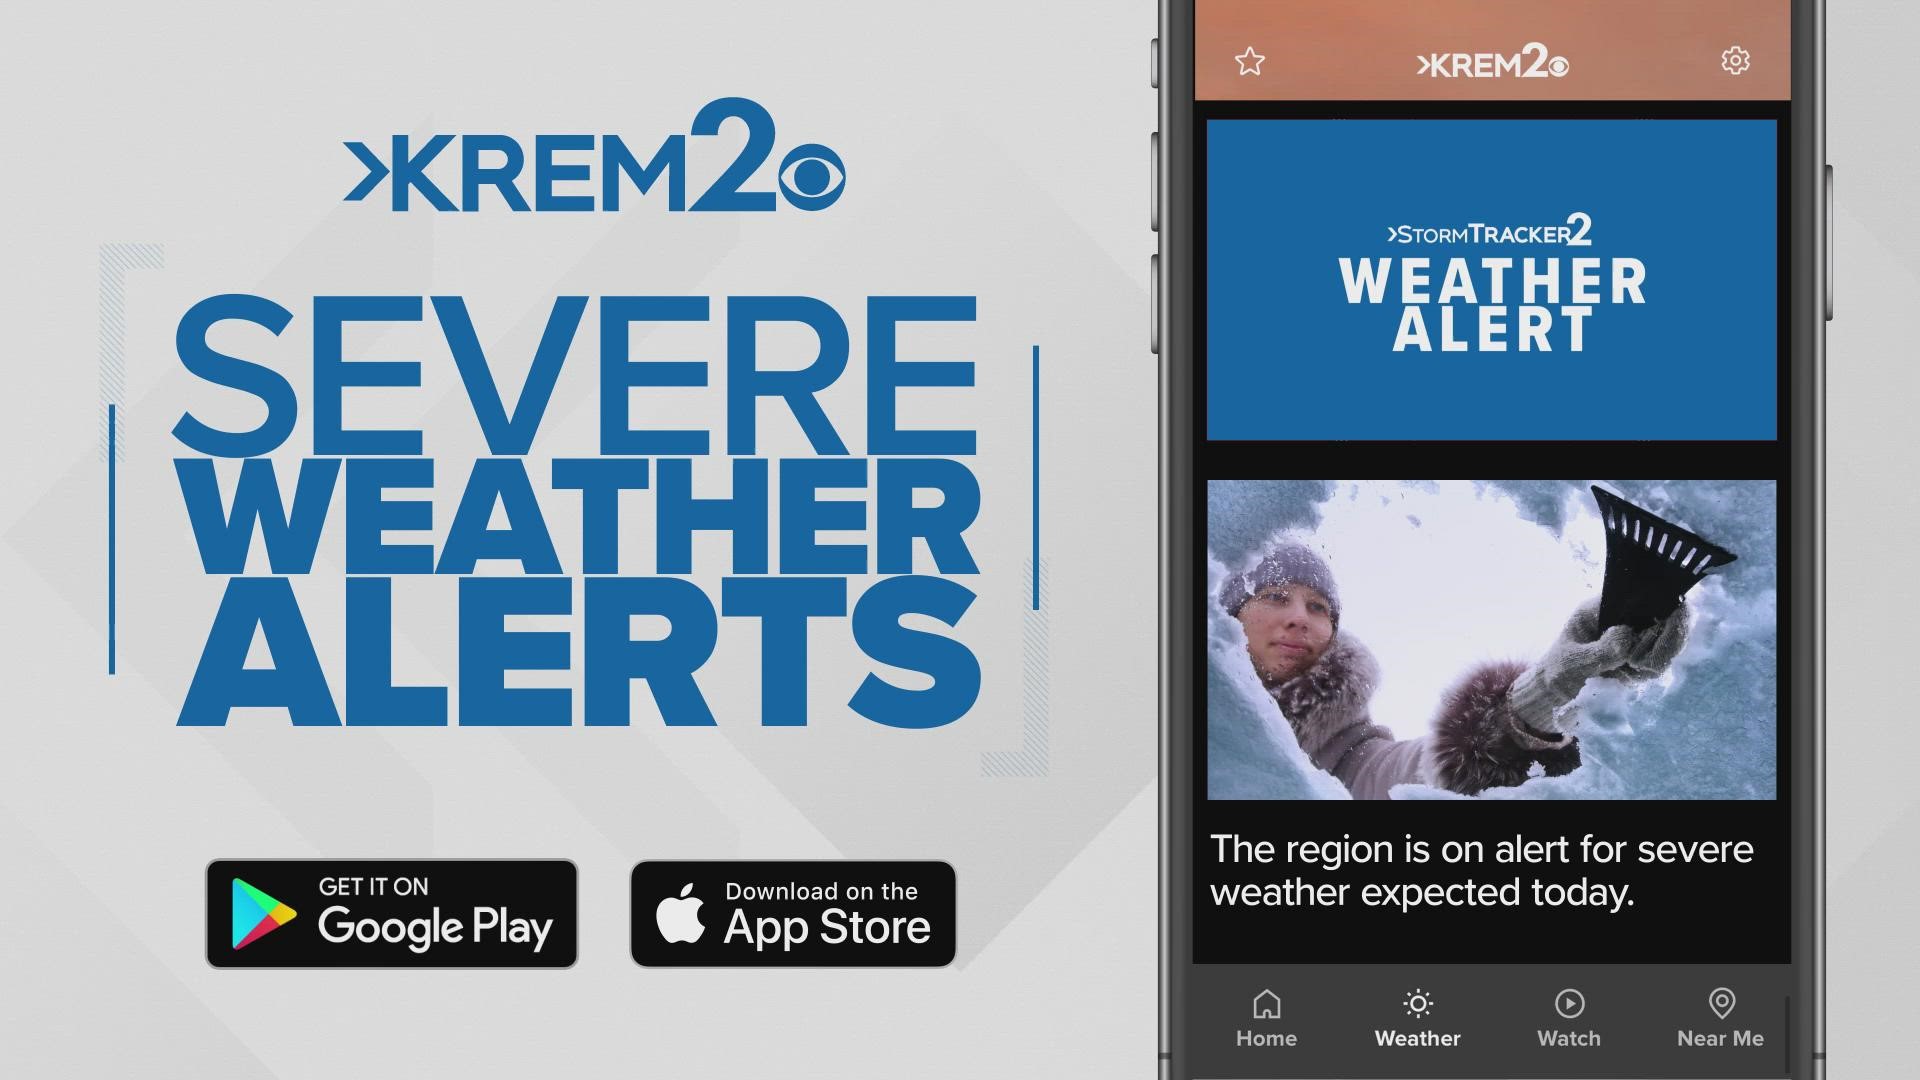 Download the KREM 2 app for weather alerts and updates.